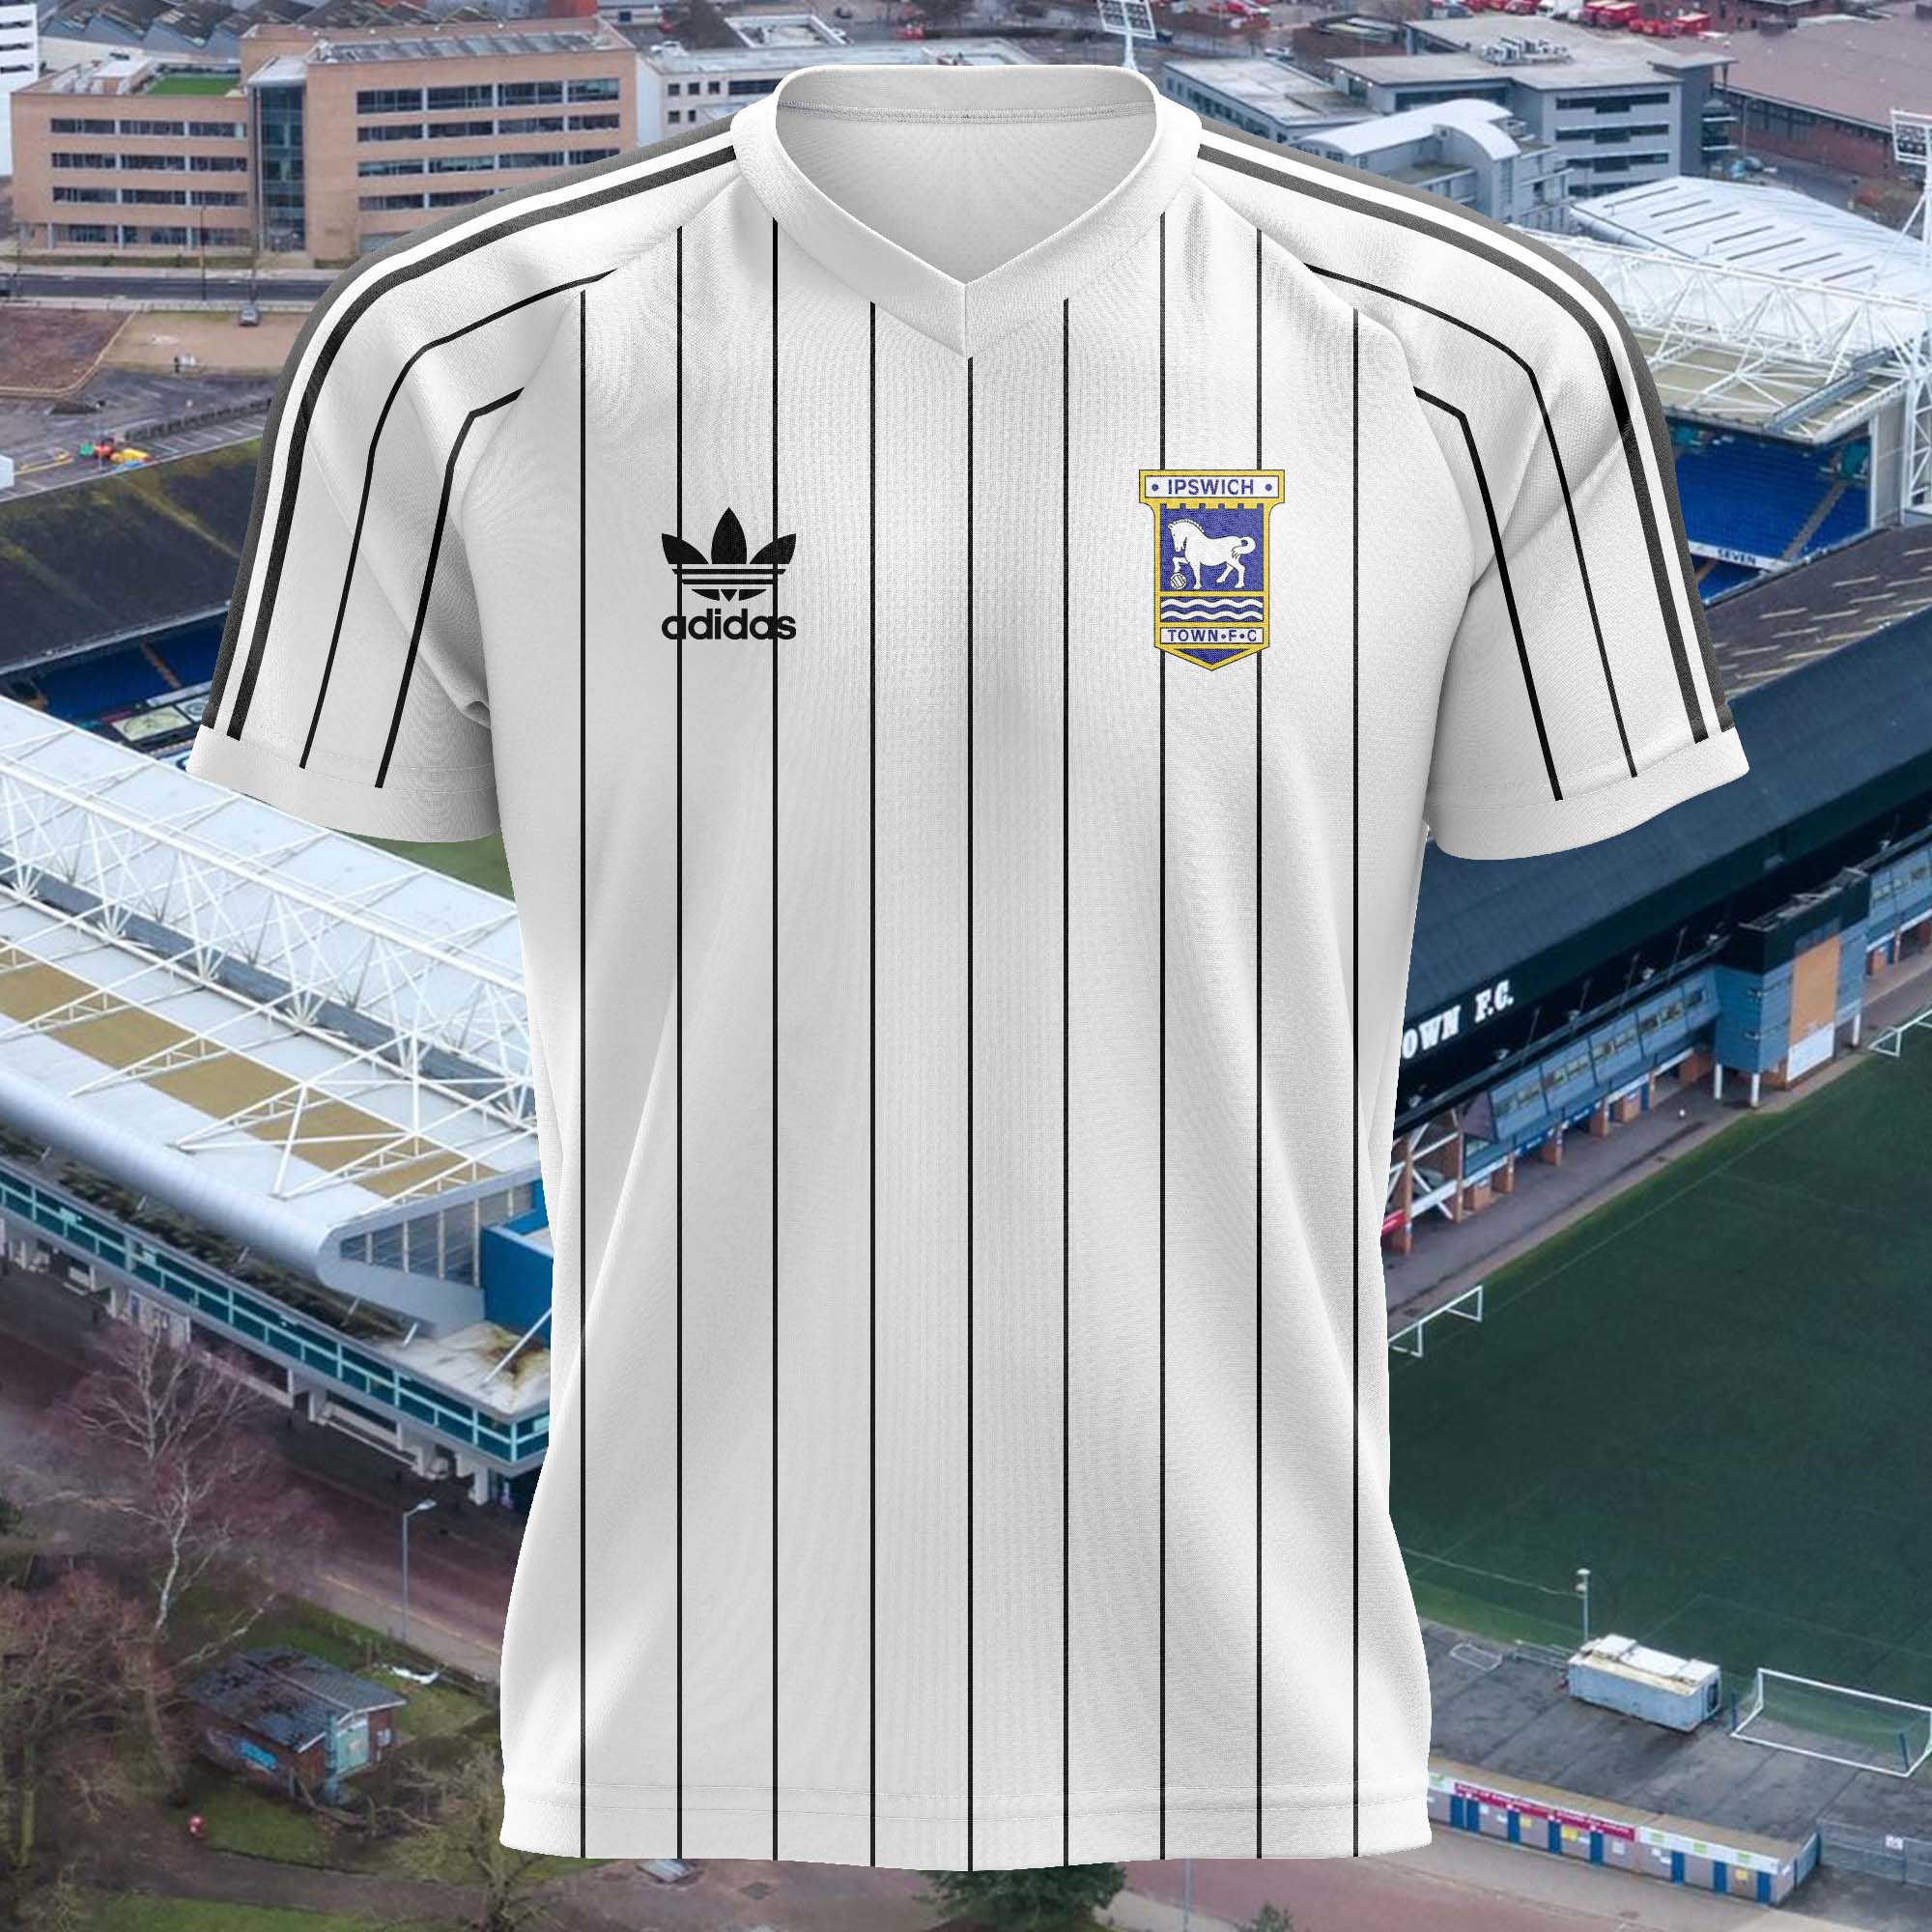 Ipswich Town 1981-82 Away Kit Retro Shirt PT56310